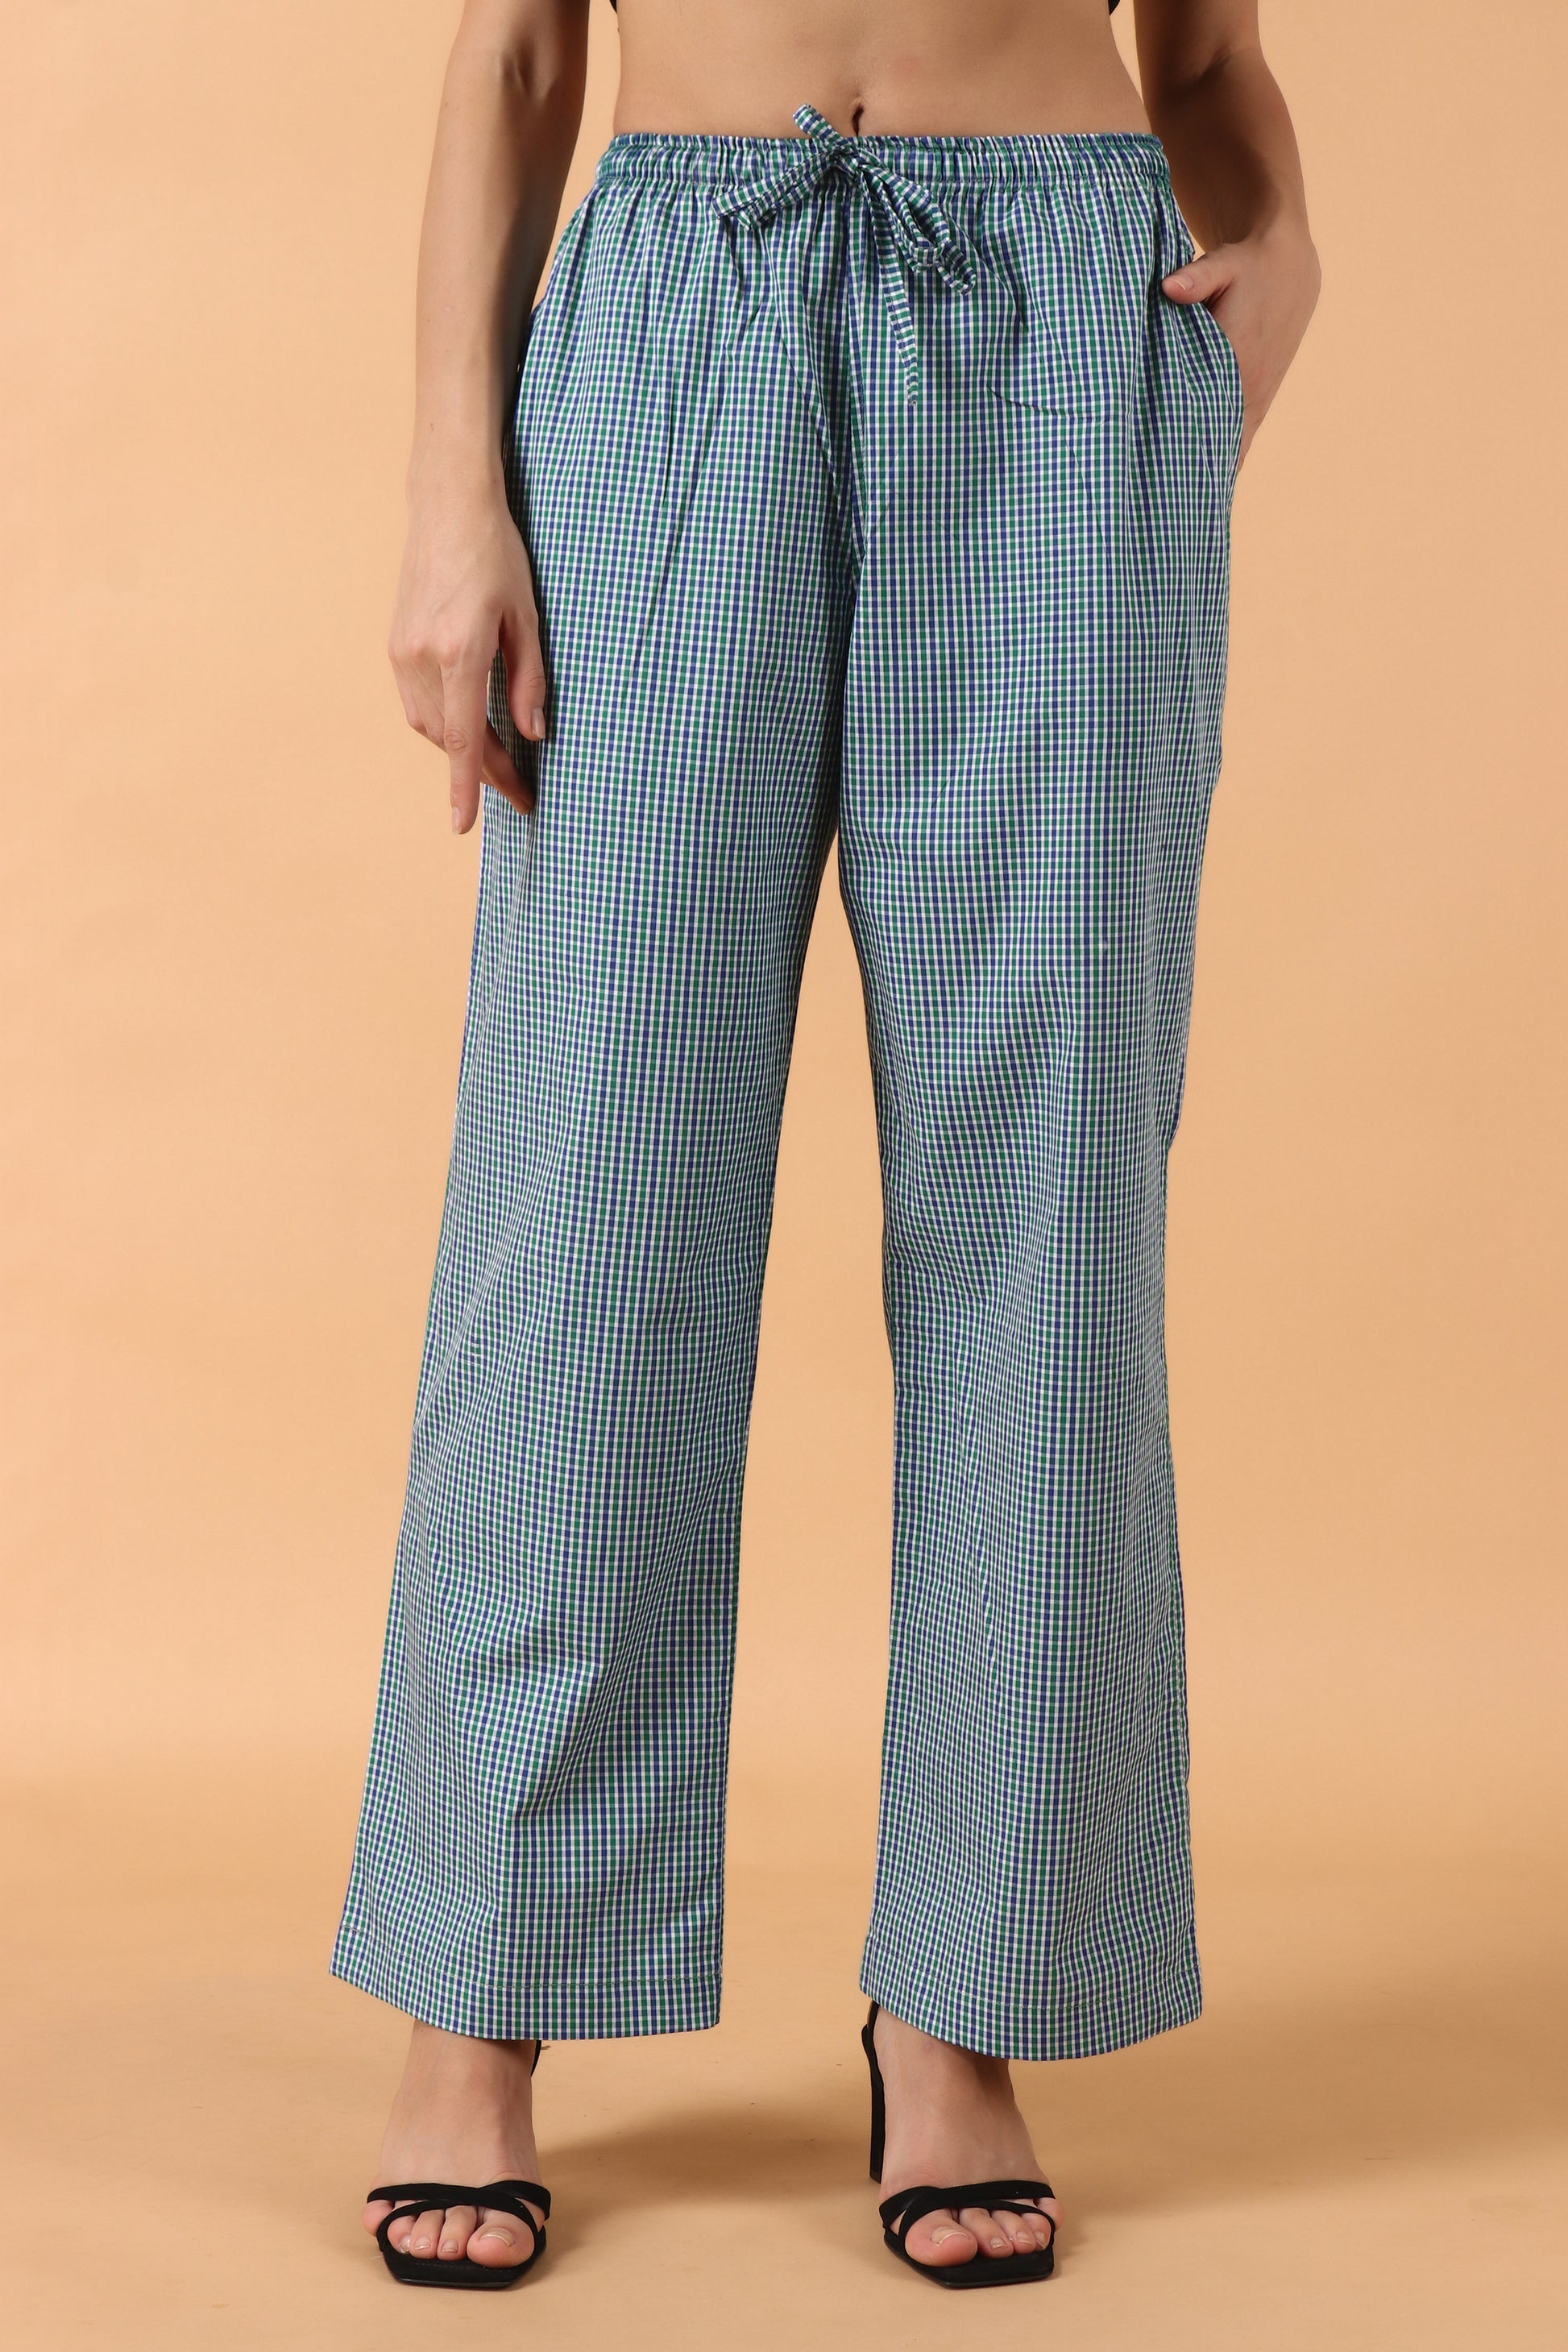 All Size, Blue, Cotton Pajama, Cotton Pyjama, Double Side Pockets, Dual Side Pockets, Full Elasticized Waistline, Grid Pattern, Plus Size, Poly Cotton, Pyjama, Two Side Pockets